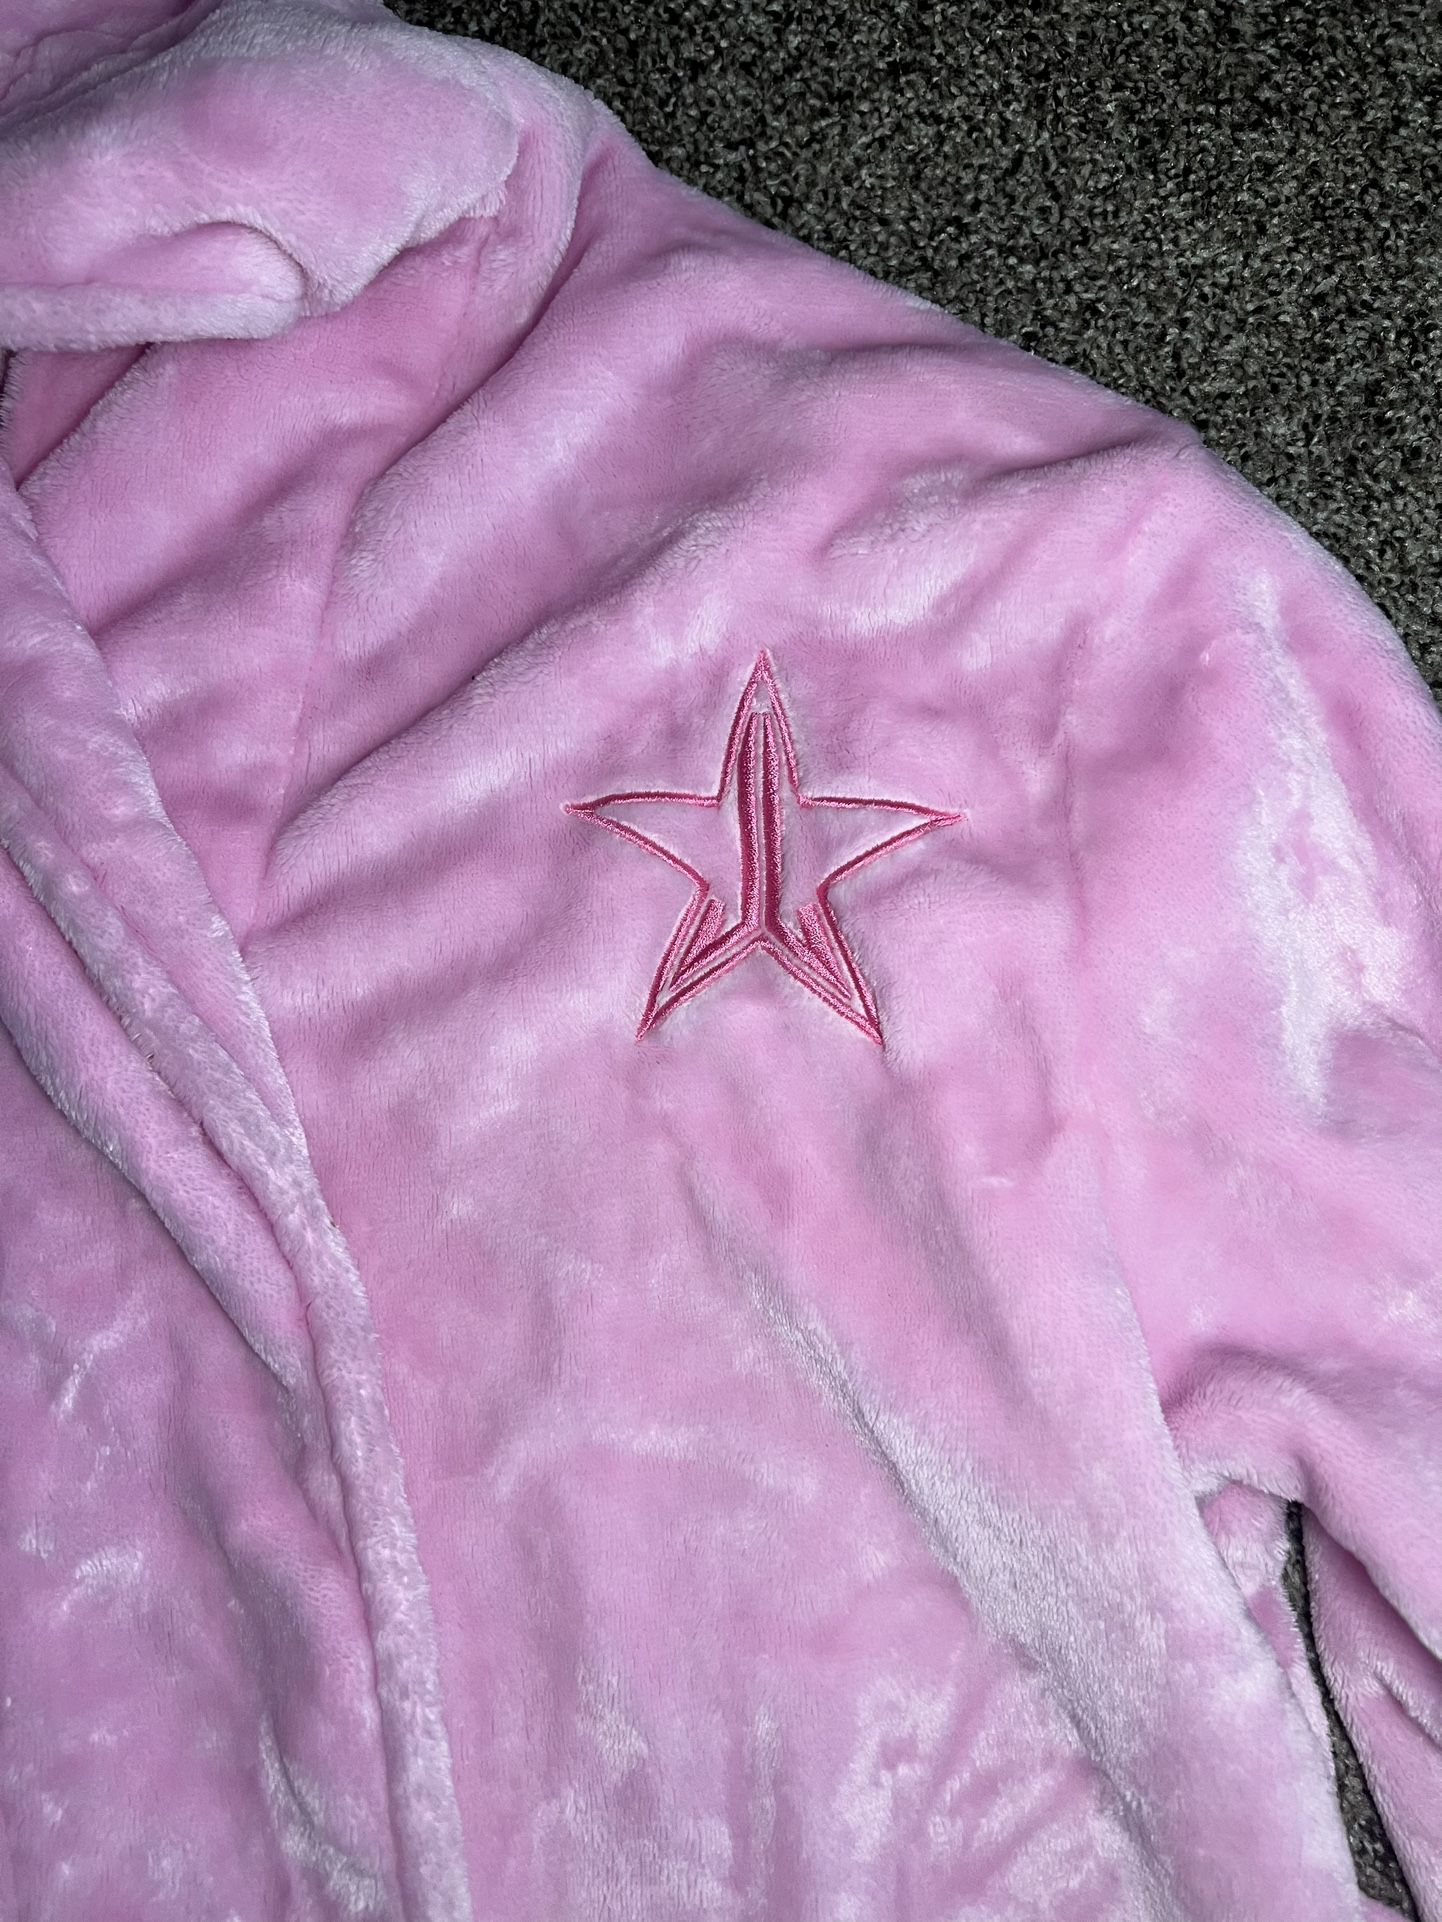 Jeffrey Star Pink Robe